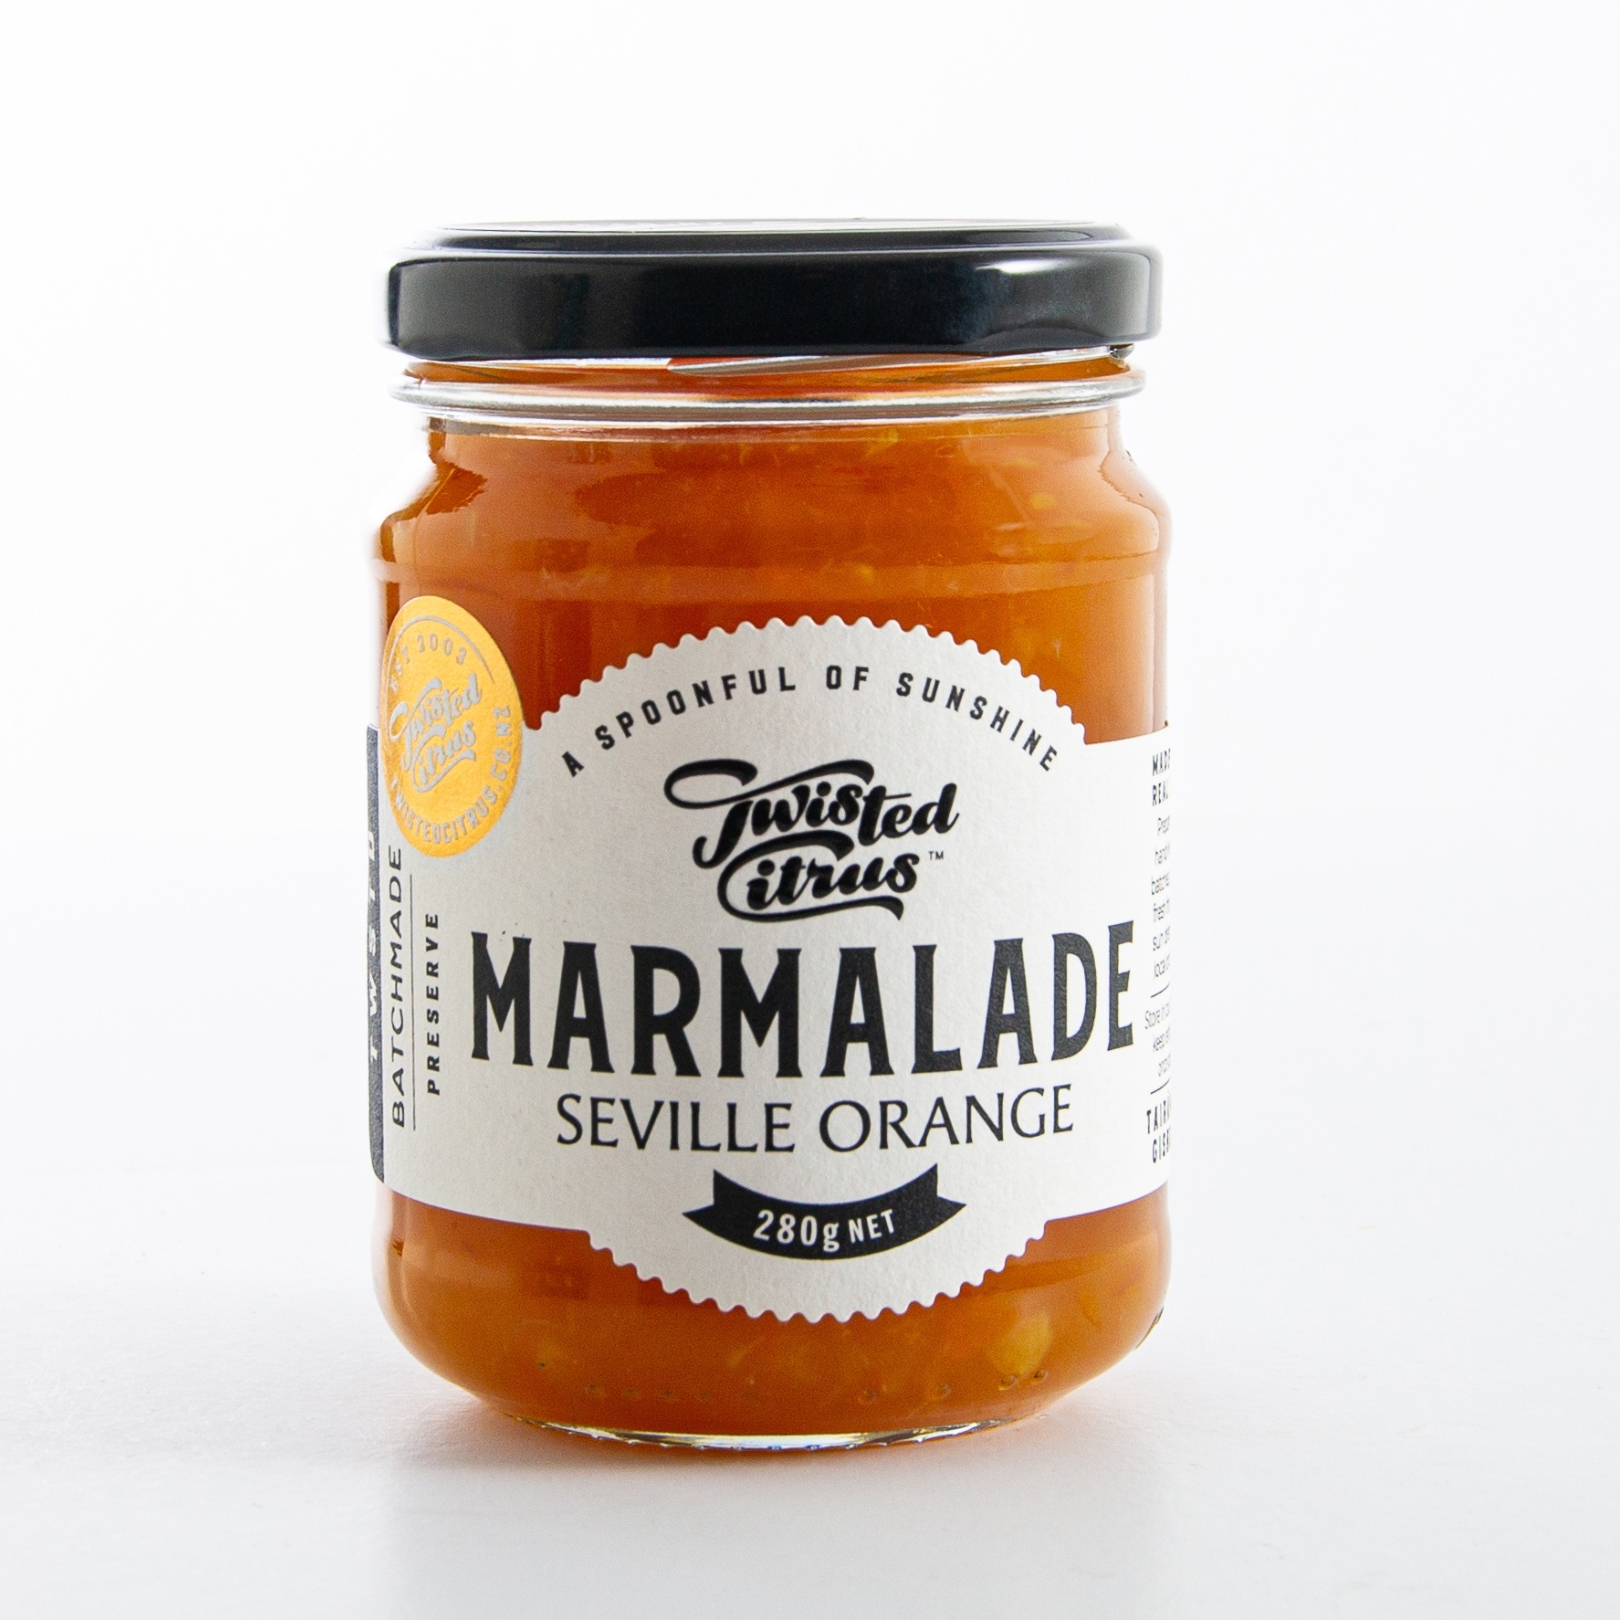 Buy Seville Orange Marmalade Online NZ - Twisted Citrus